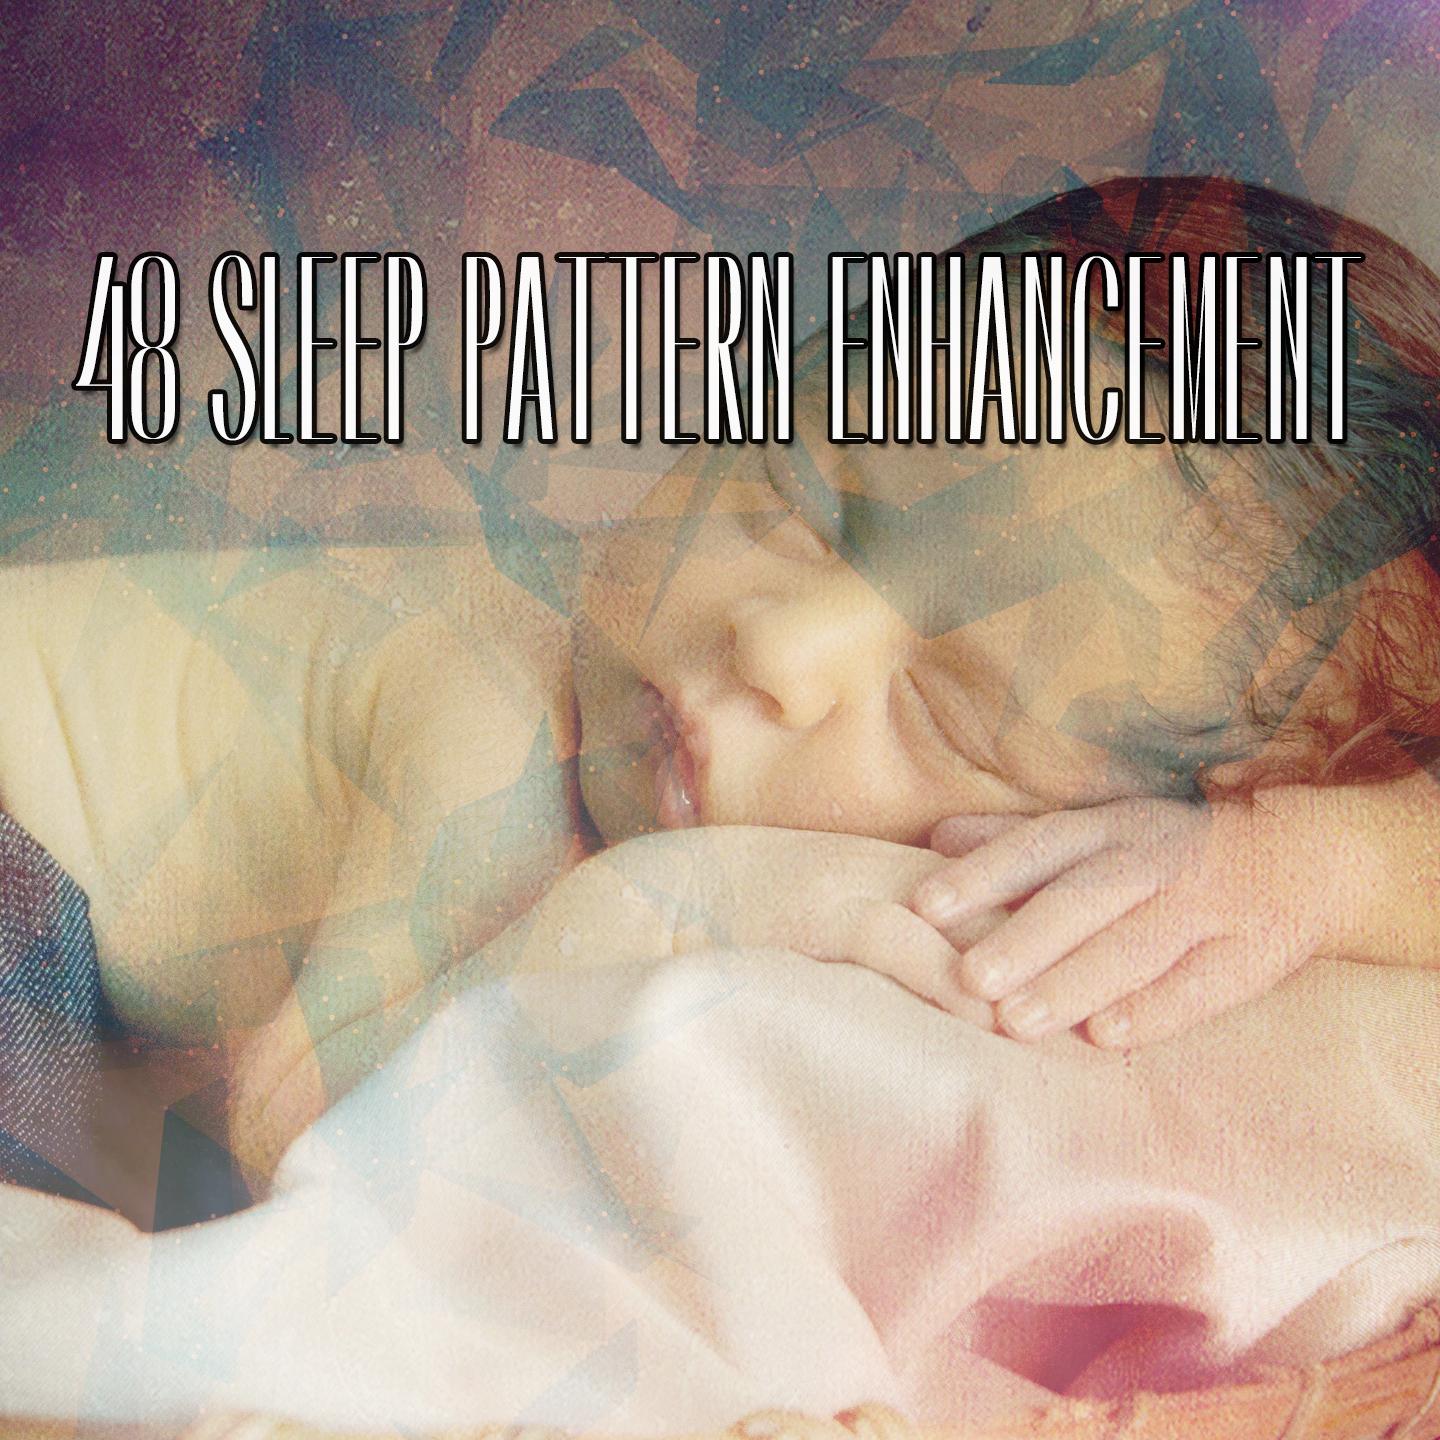 48 Sleep Pattern Enhancement